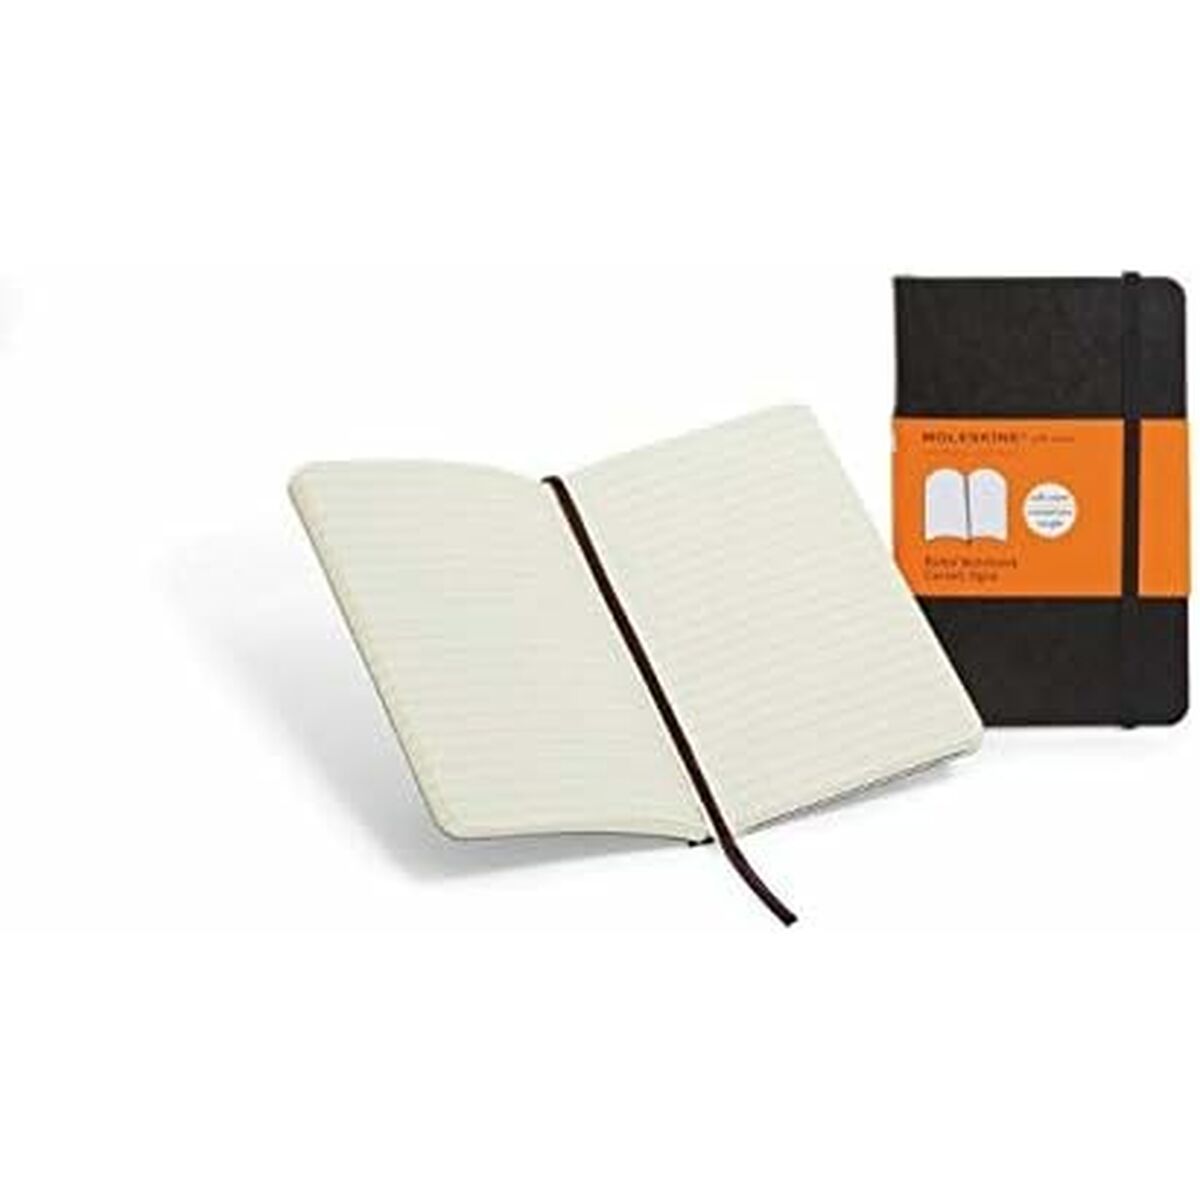 Notebook Moleskine 978-88-8370-722-3 19 x 25 cm Black